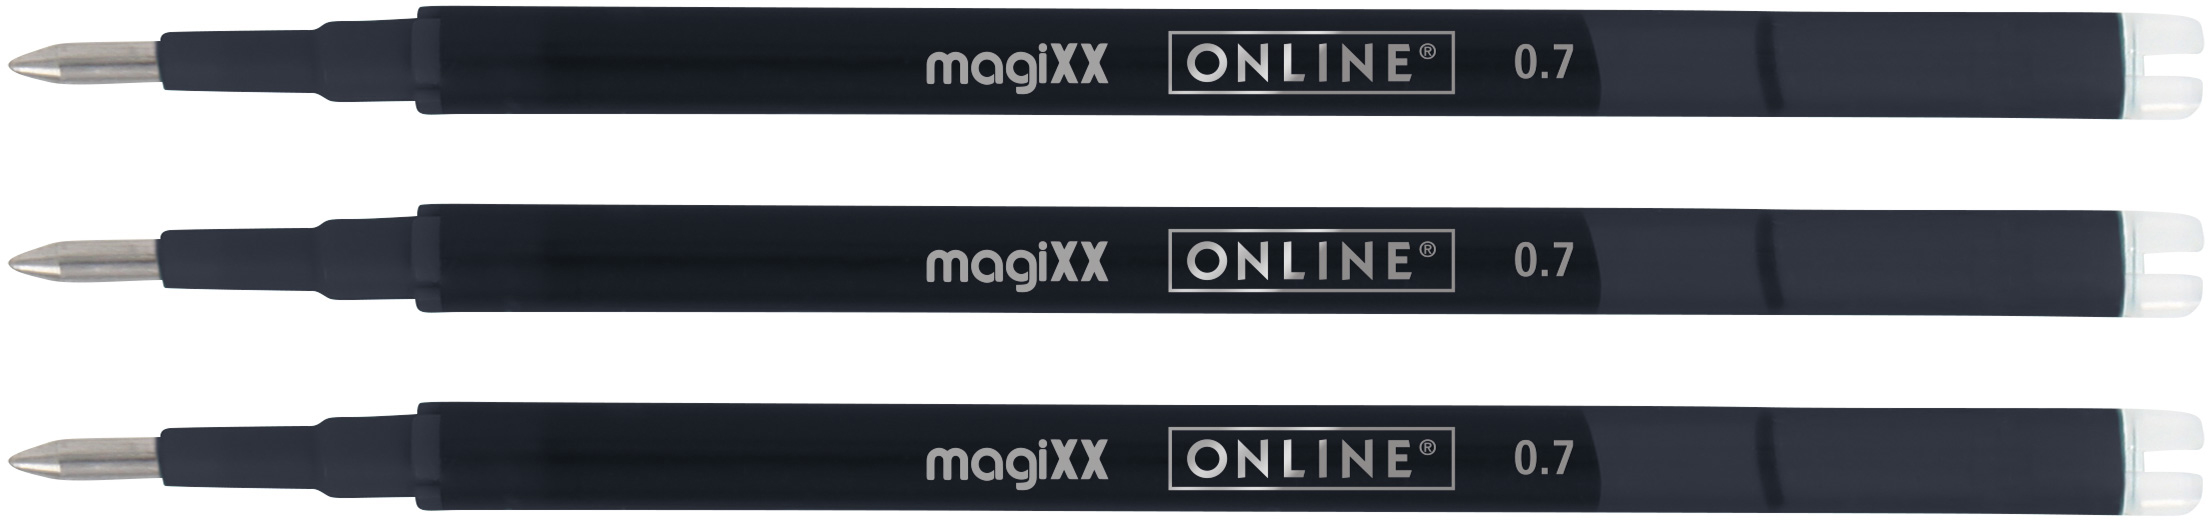 ONLINE Mine Gel MagiXX 40161/3 noir, Tag-Bag 0.7mm